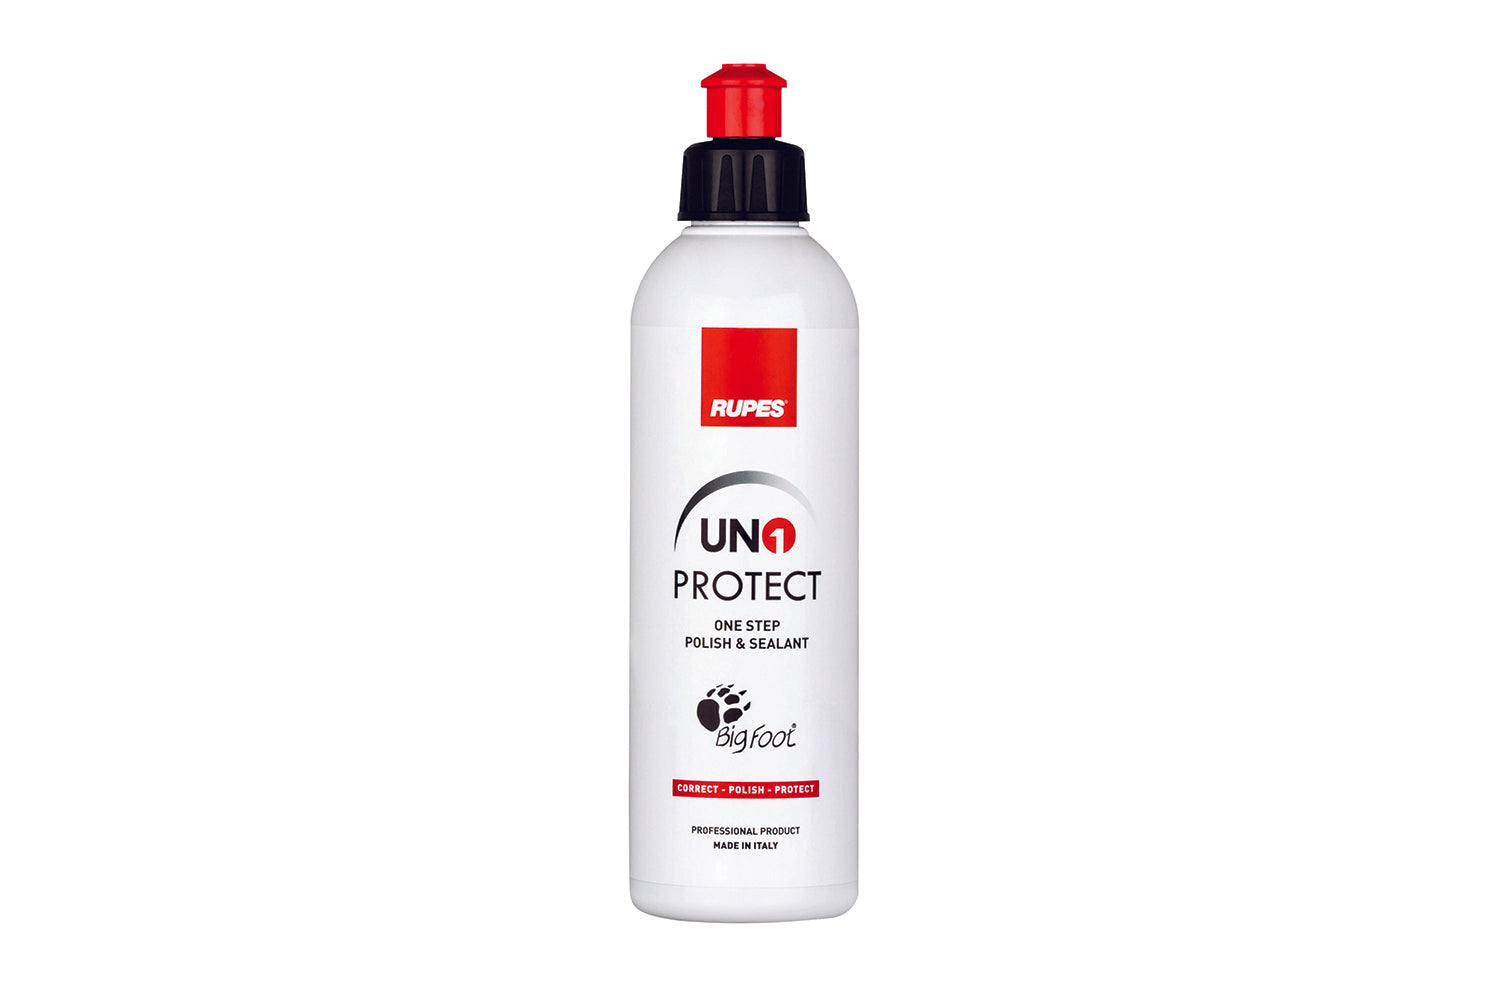 UNO Protect - One Step Polish & Sealant